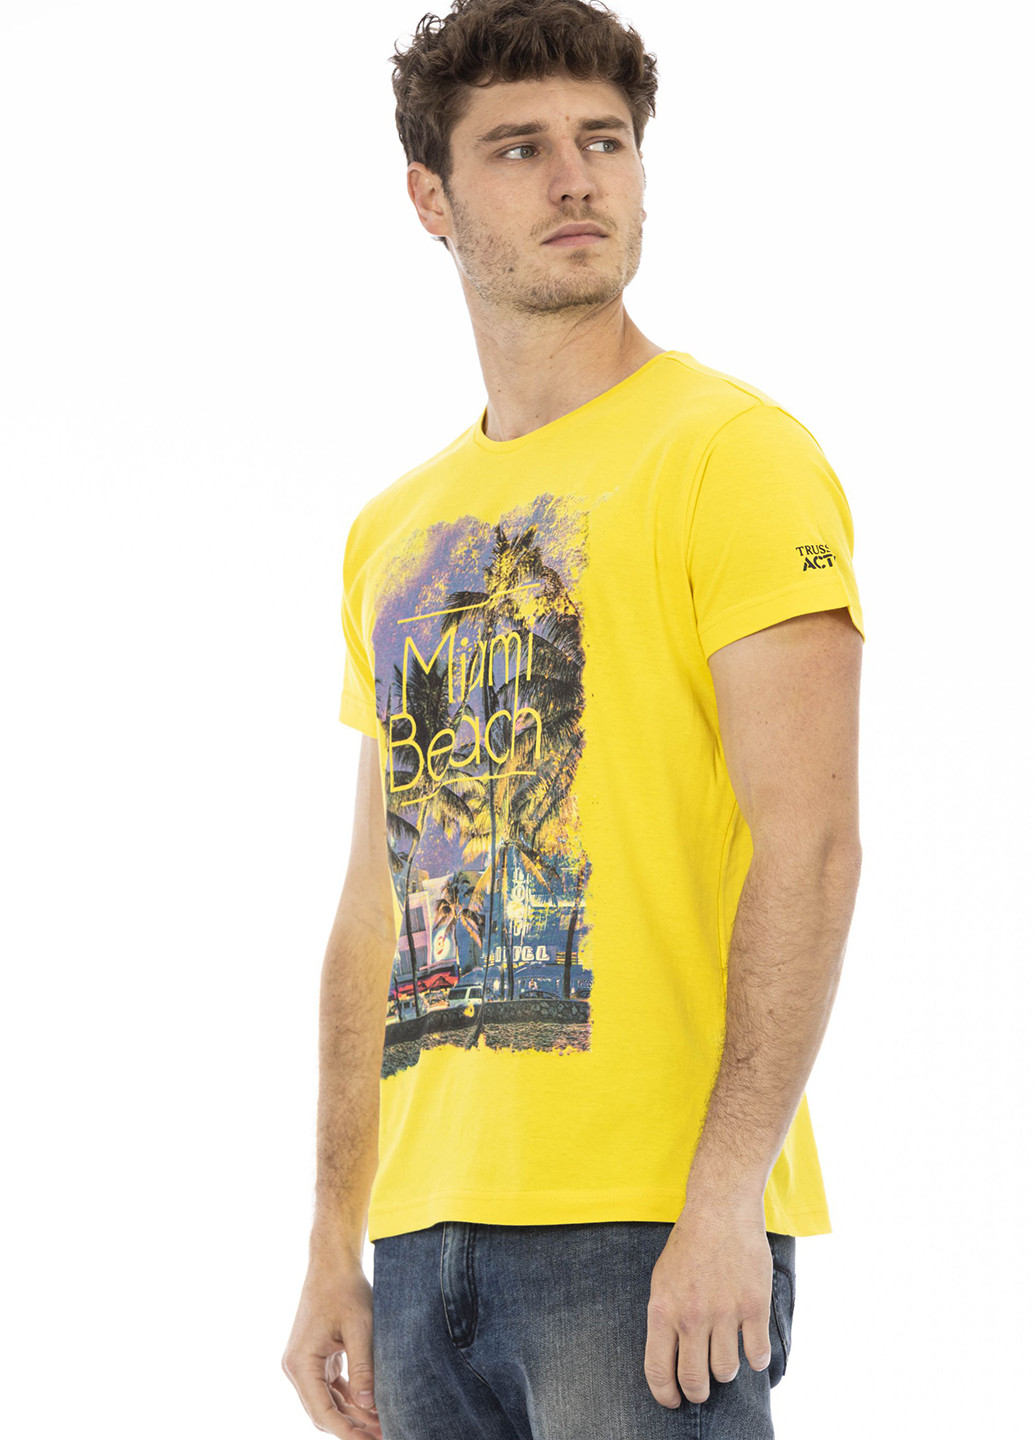 Желтая футболка Trussardi